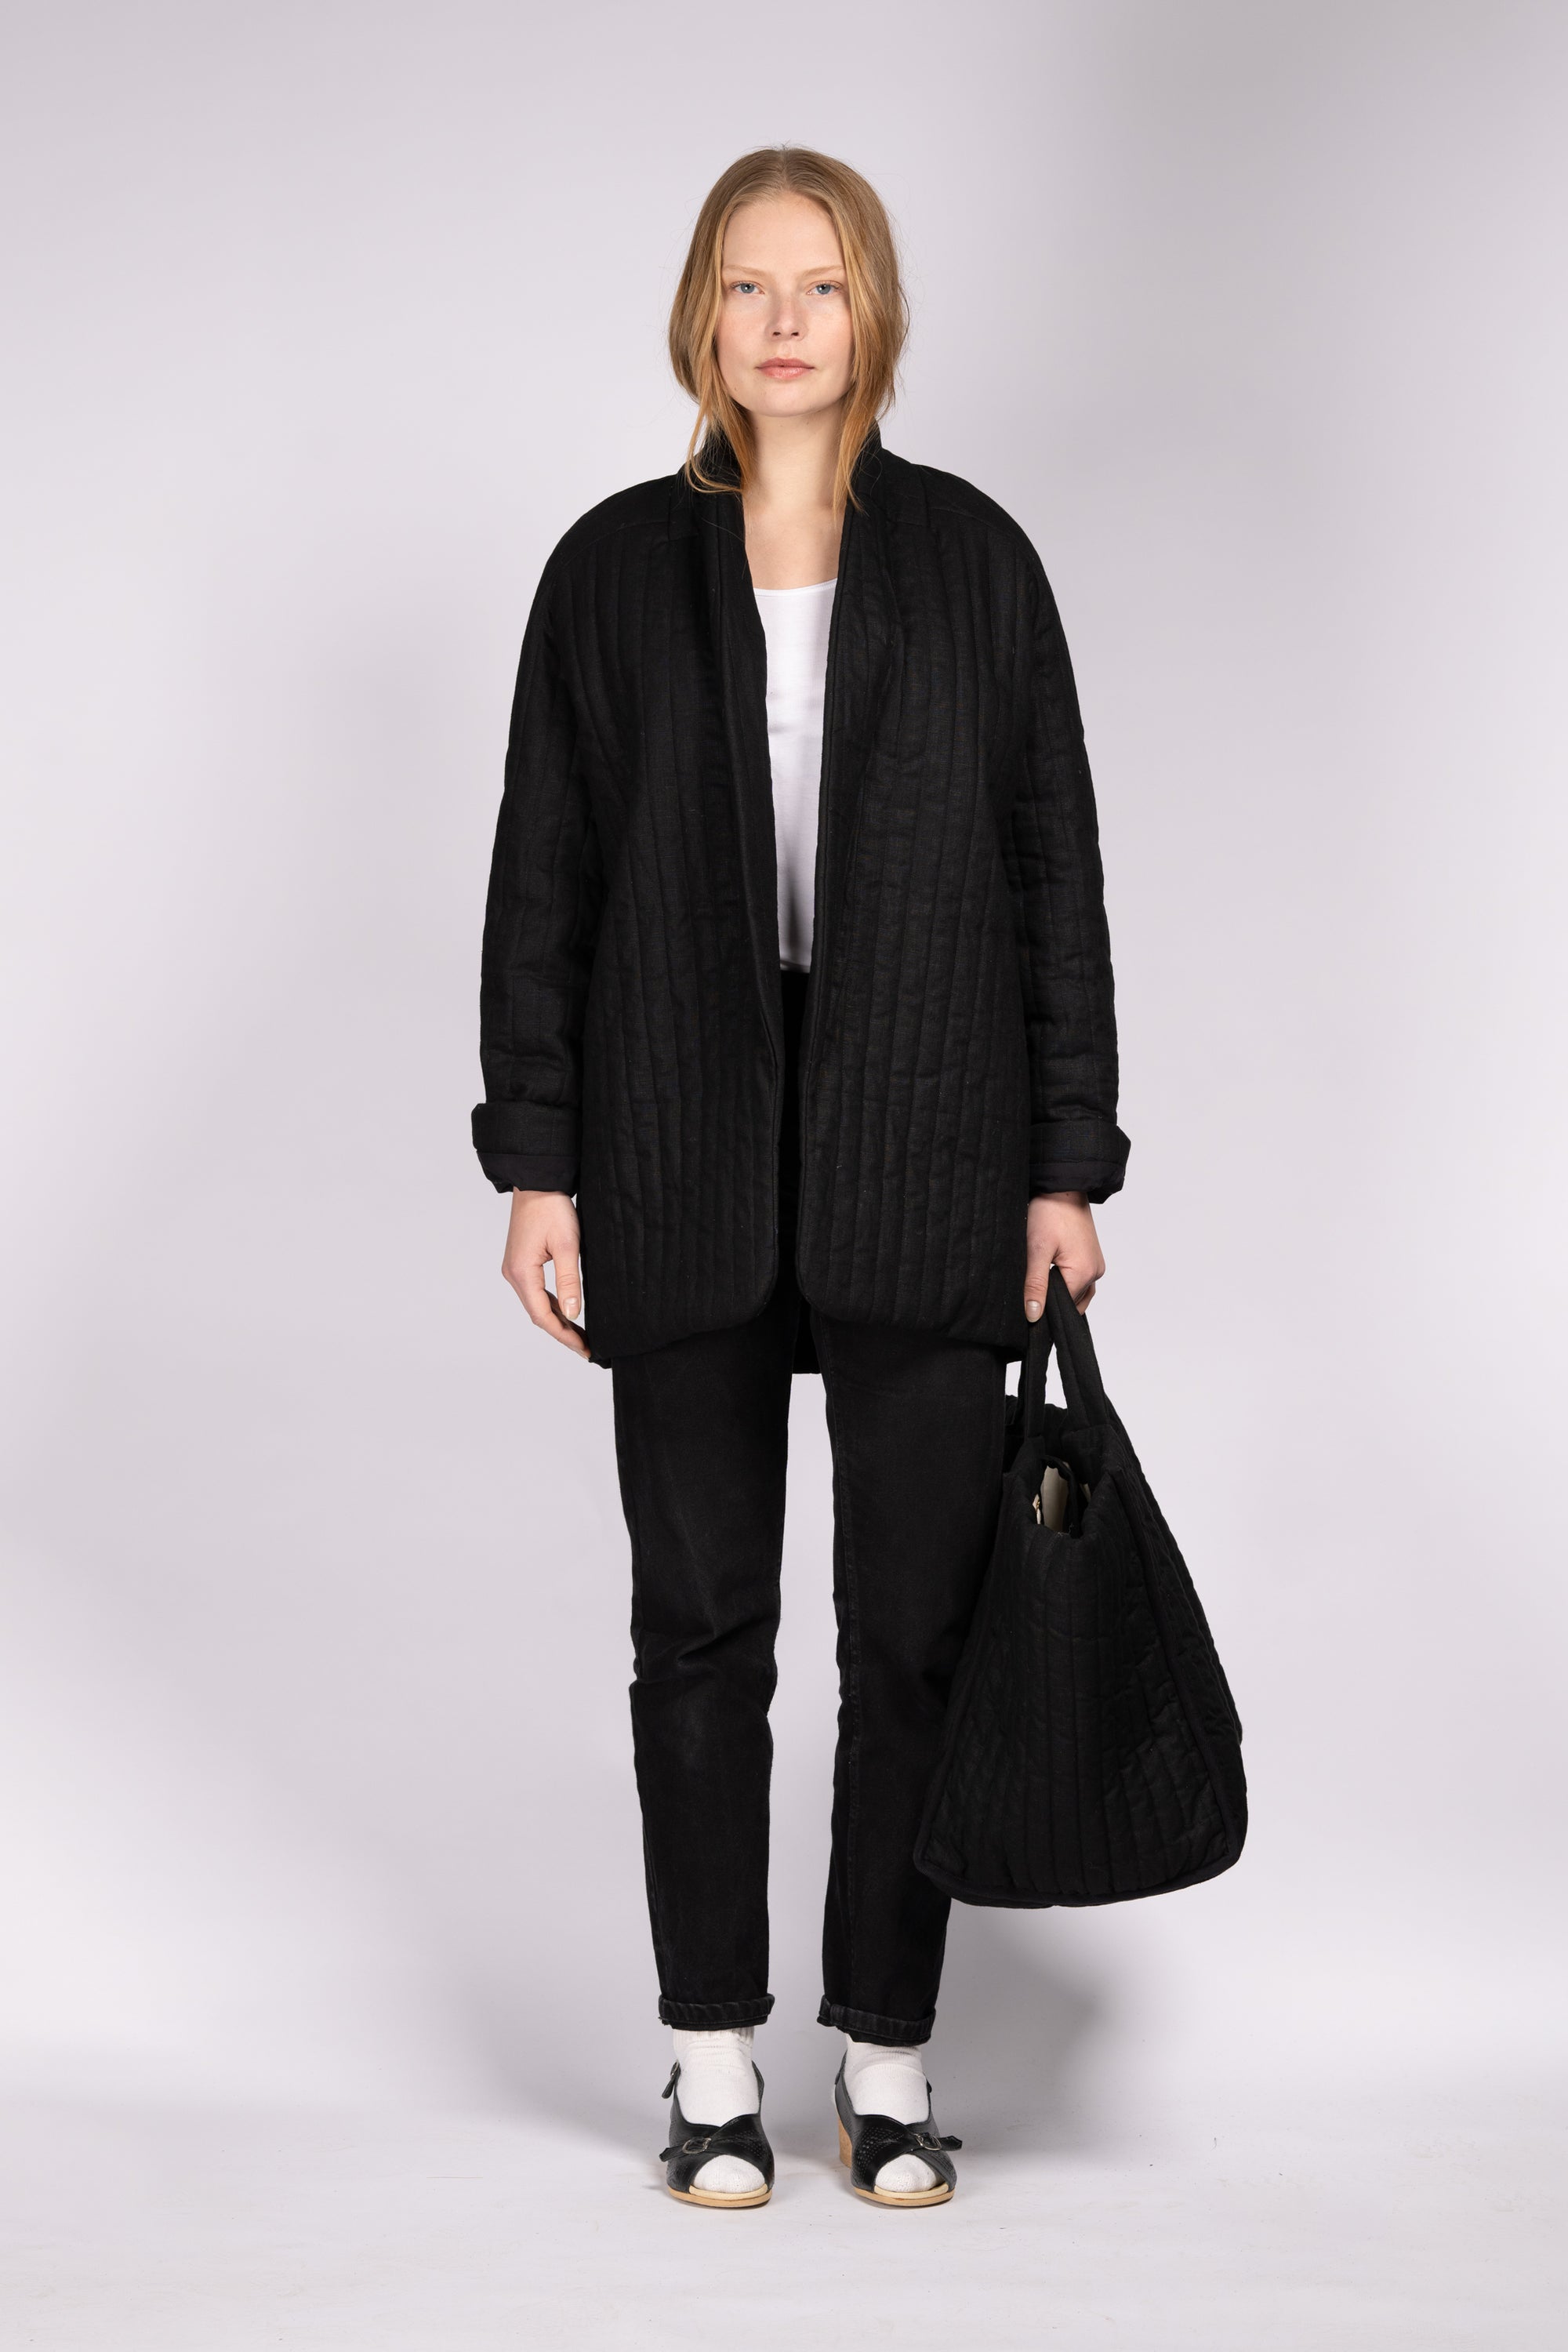 Quilt Jacket - Black Linen